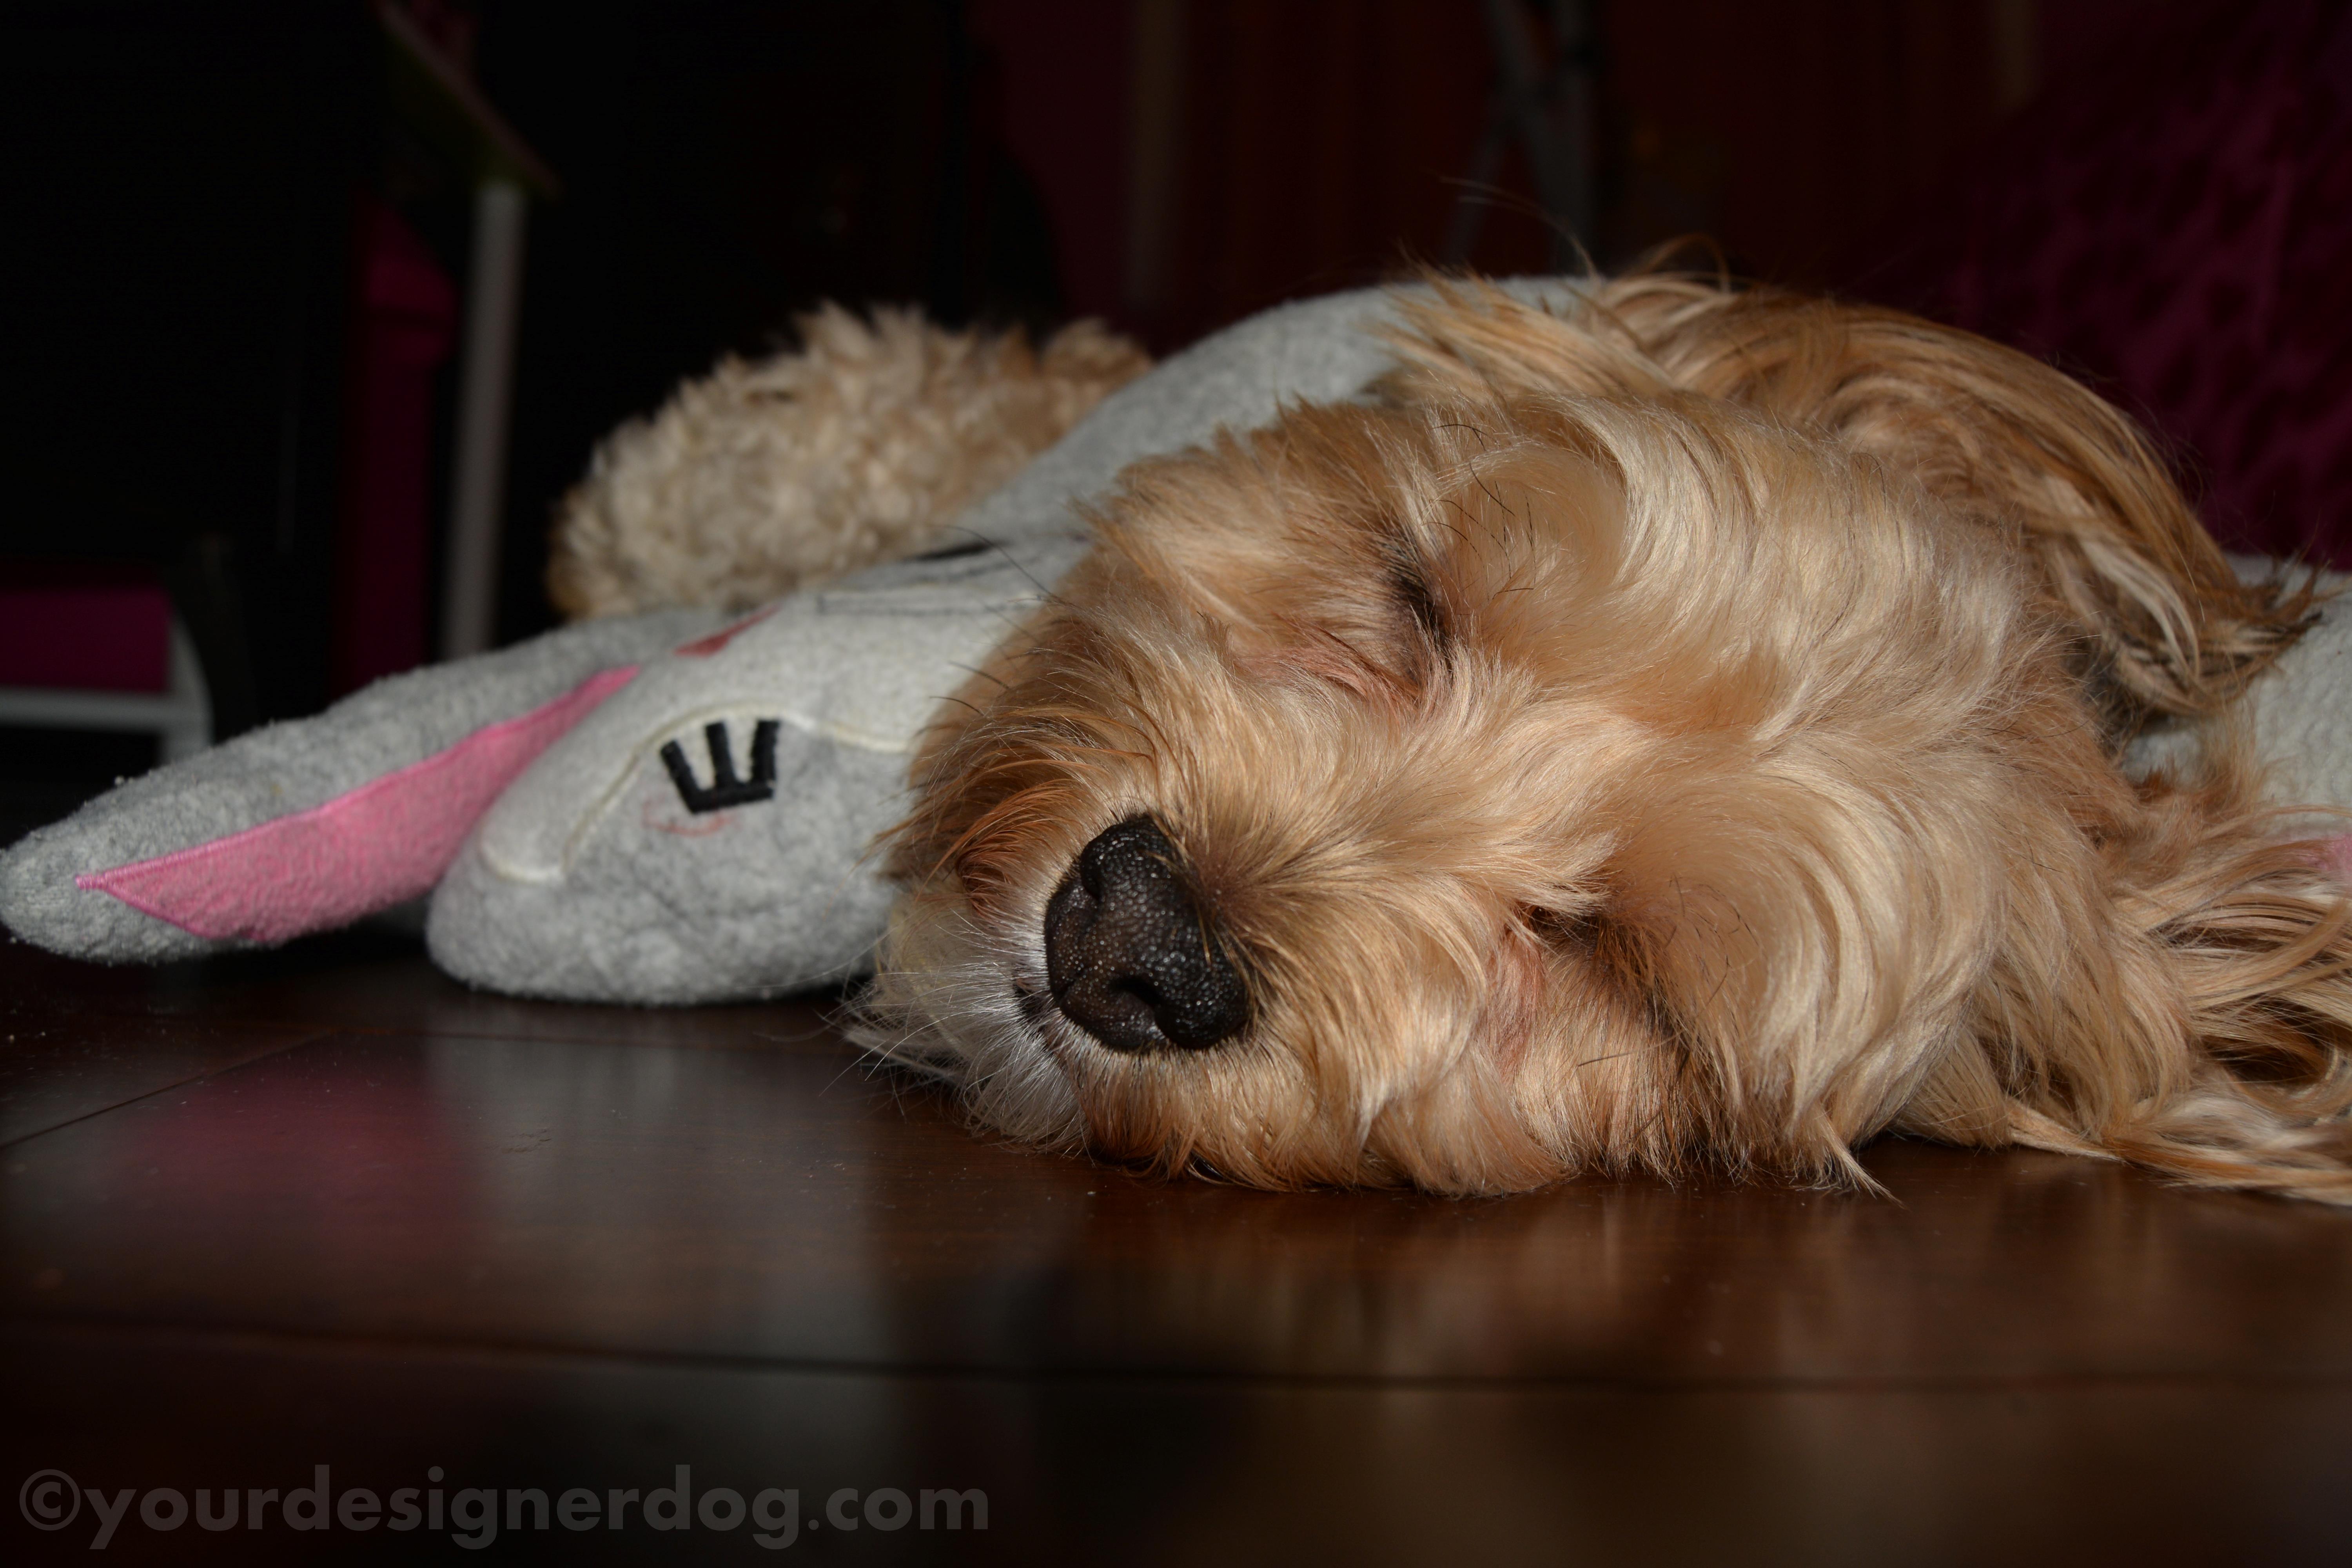 dogs, designer dogs, yorkipoo, yorkie poo, sleepy puppy, snuggly, stuffed animal, bunny